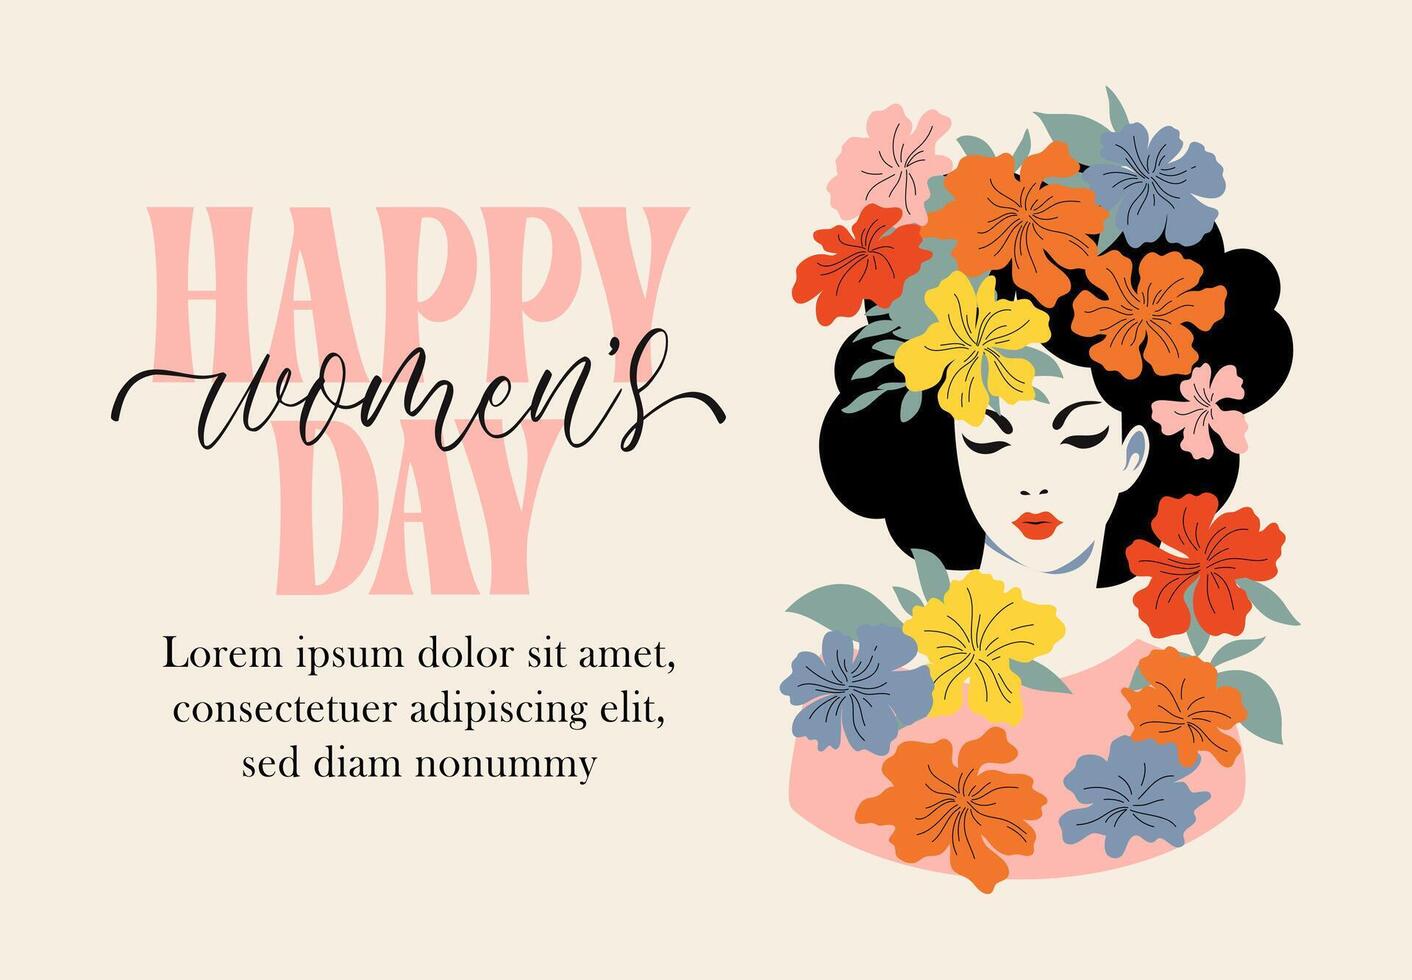 Happy International Womens Day card vector